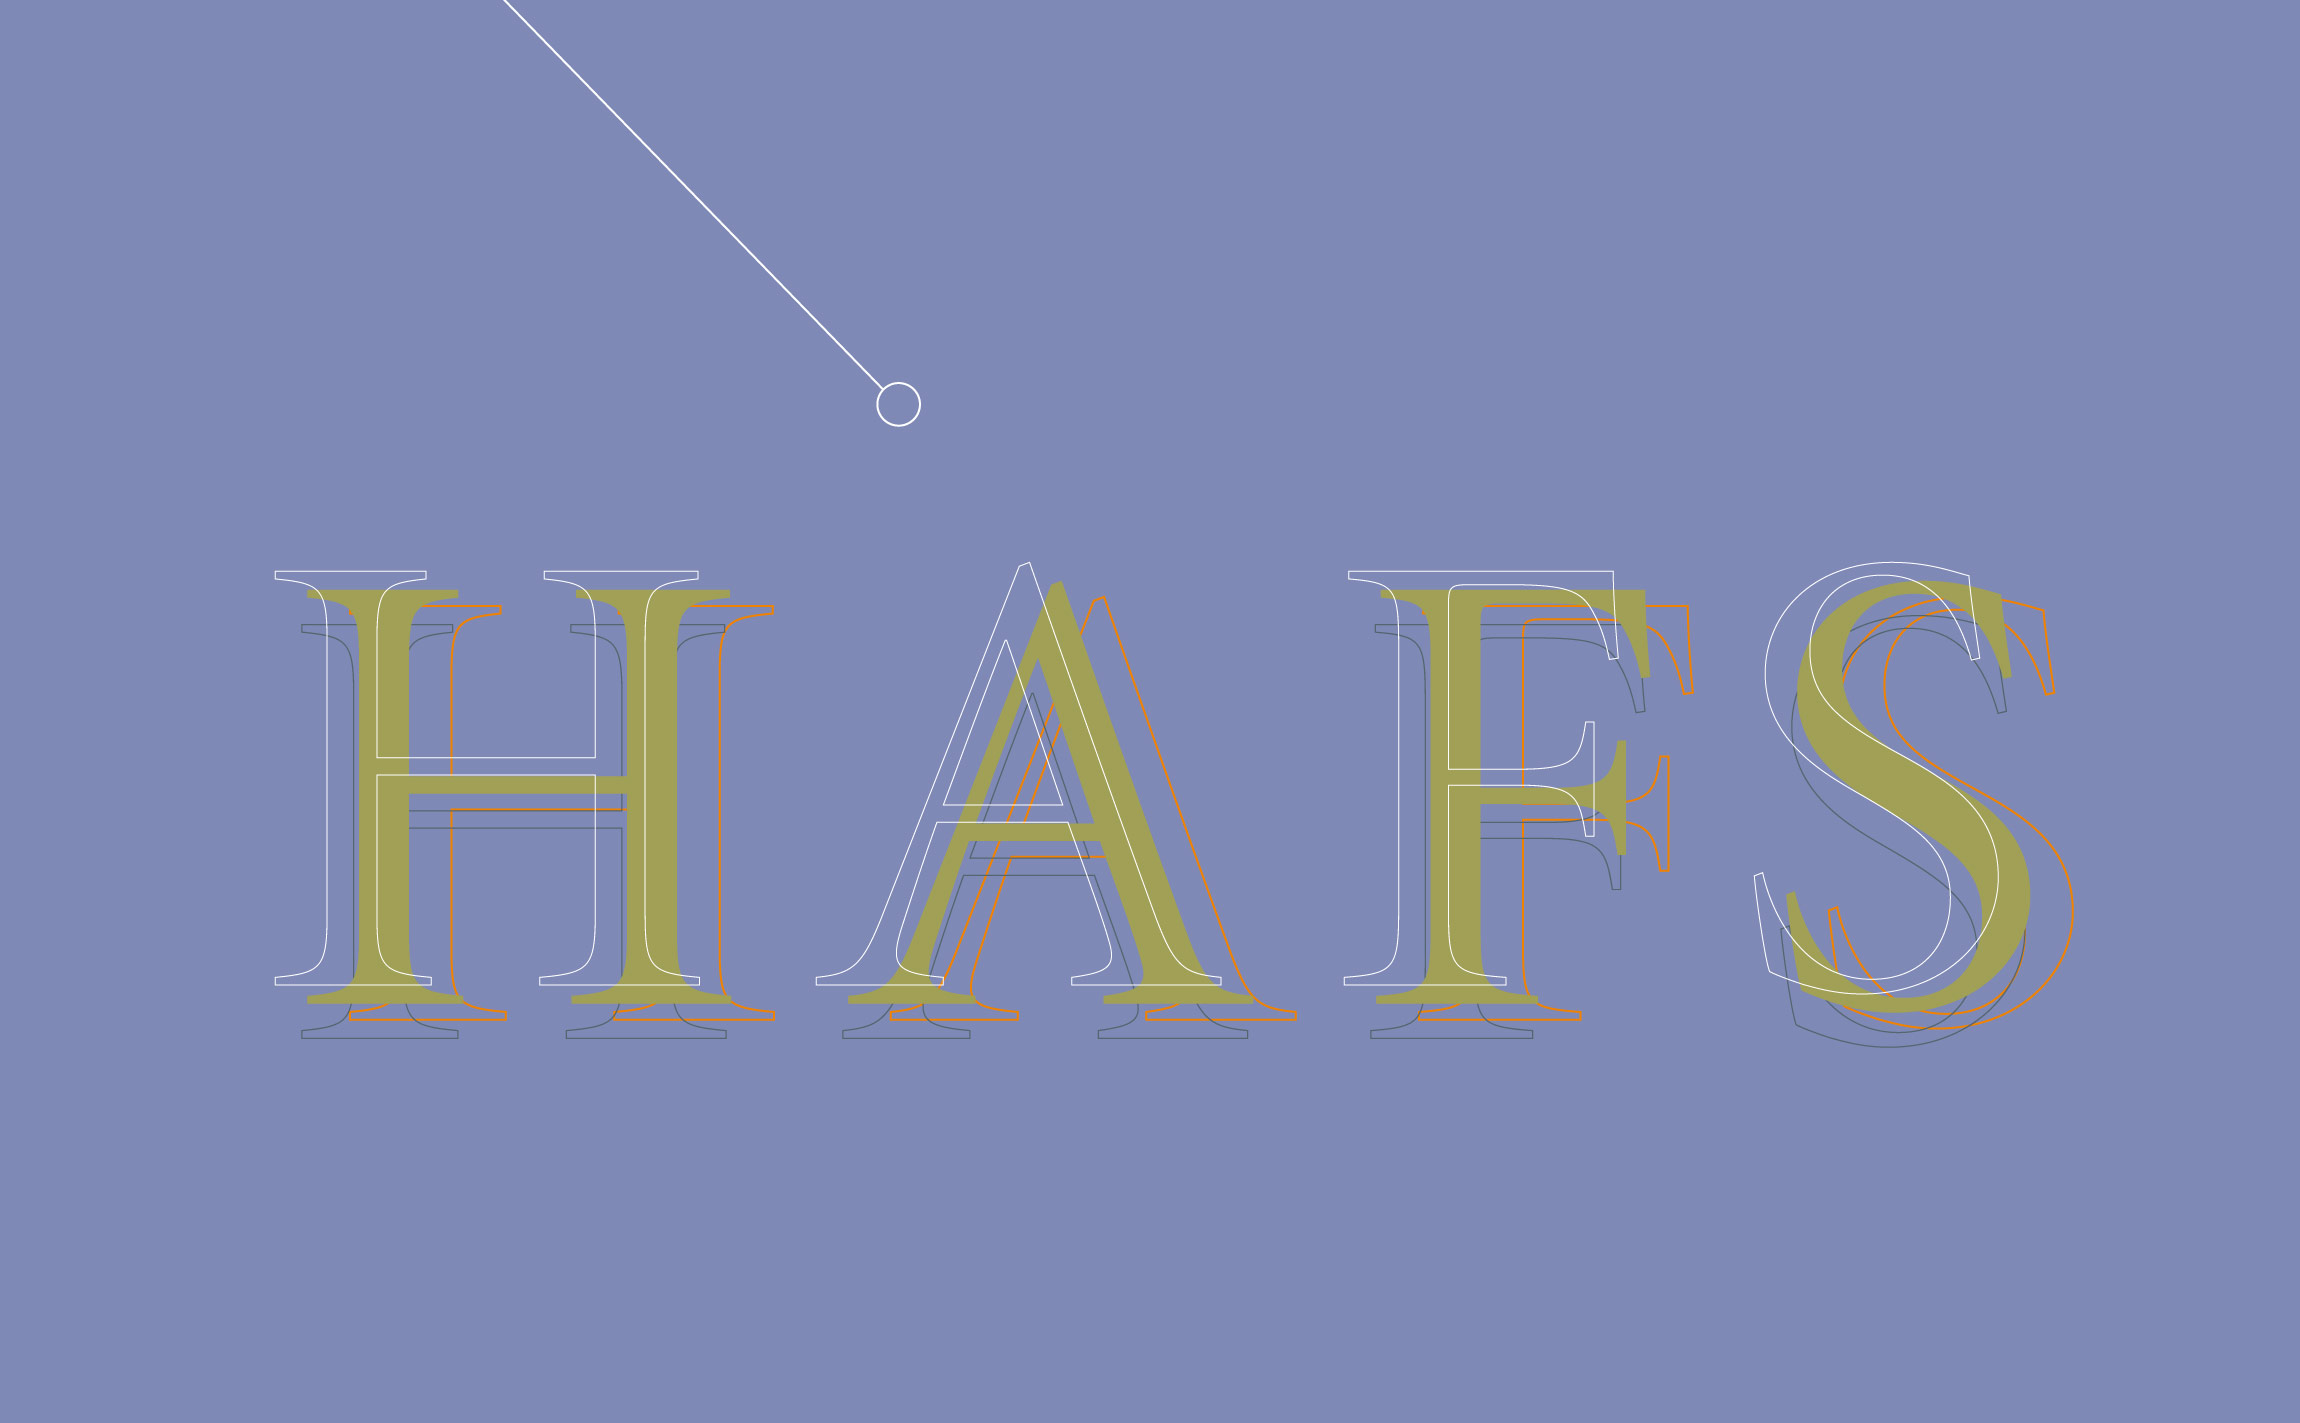 HAFS HAFS Branding & Identity